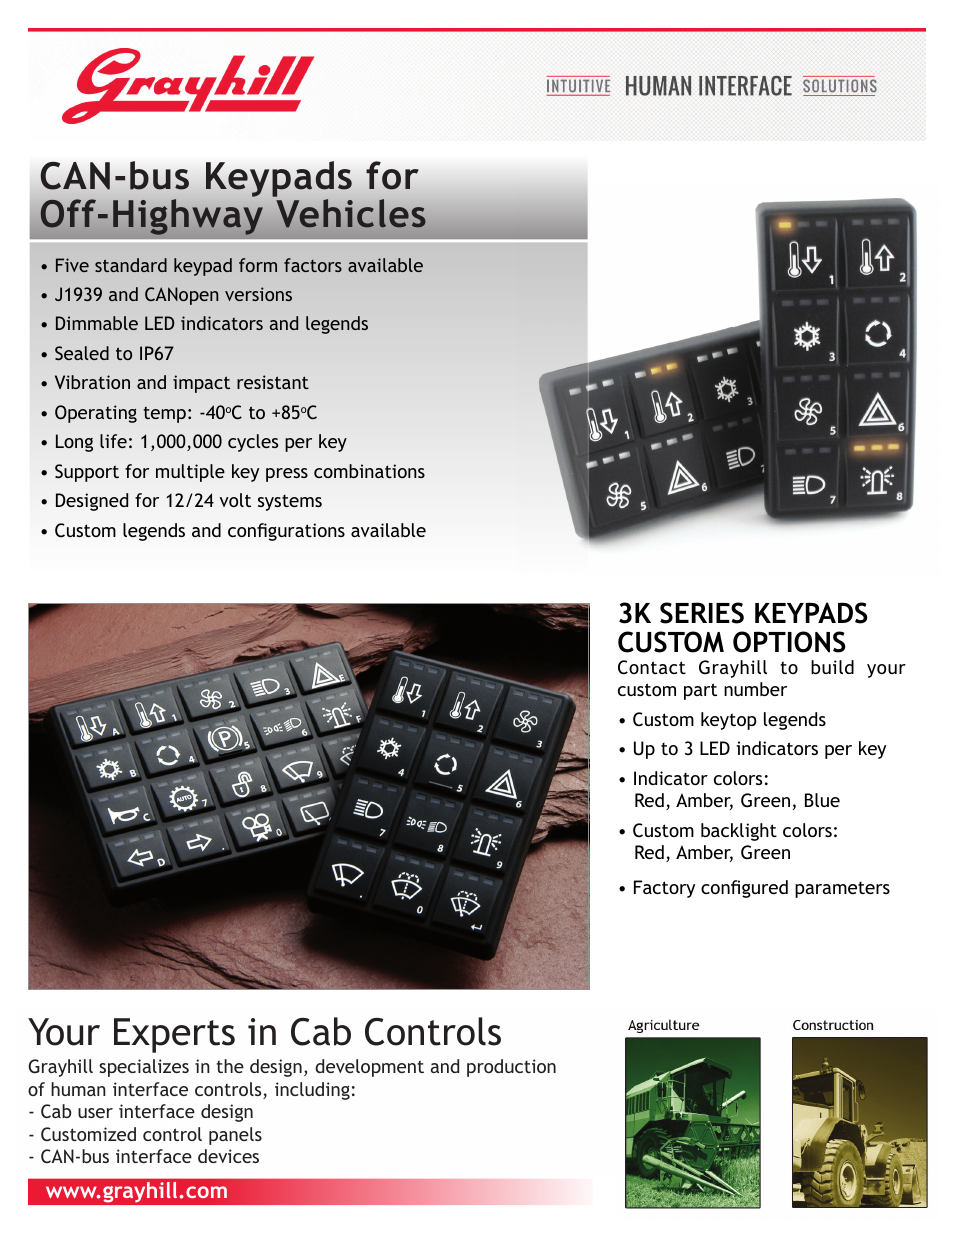 Keypads 3K Series